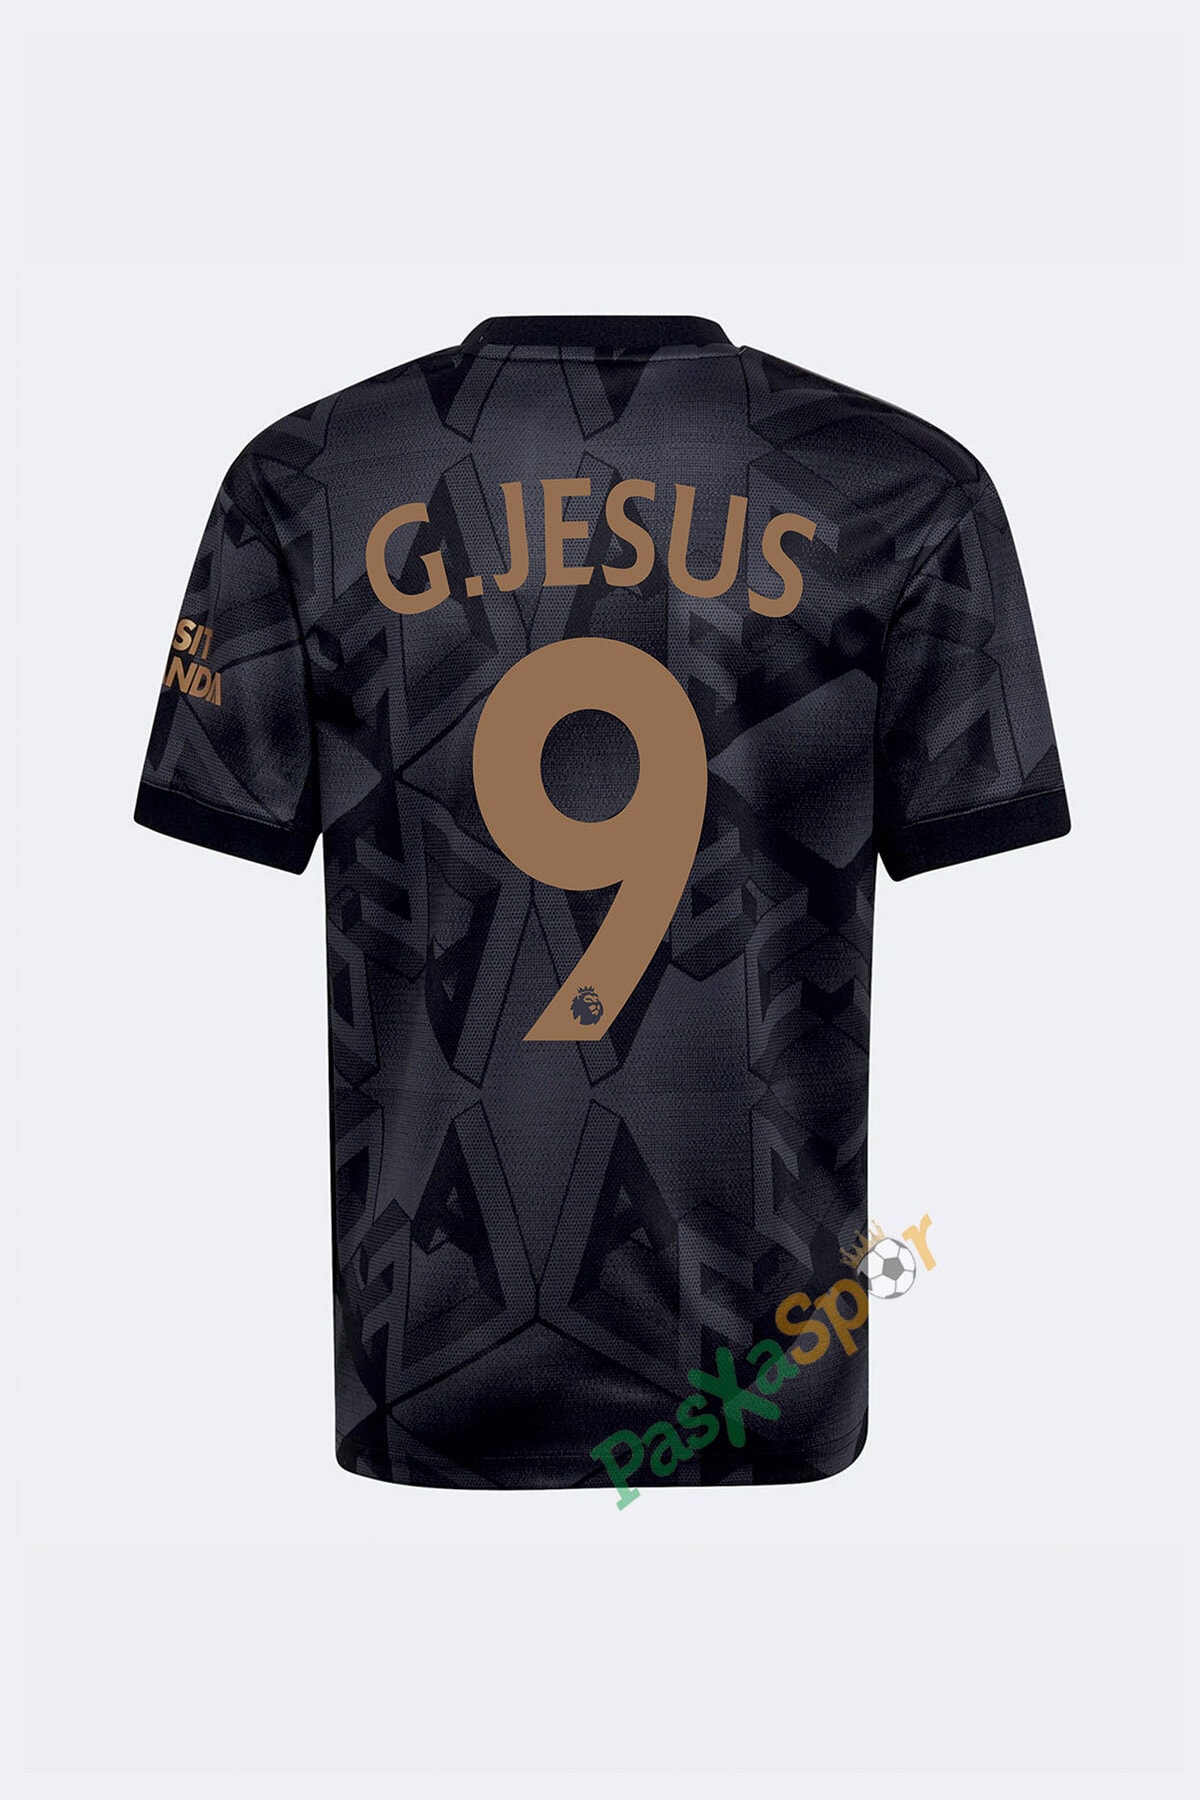 Pasxaspor Yeni Sezon Arsenal 2023 Gabriel Jesus Deplasman Maç Forma Modeli